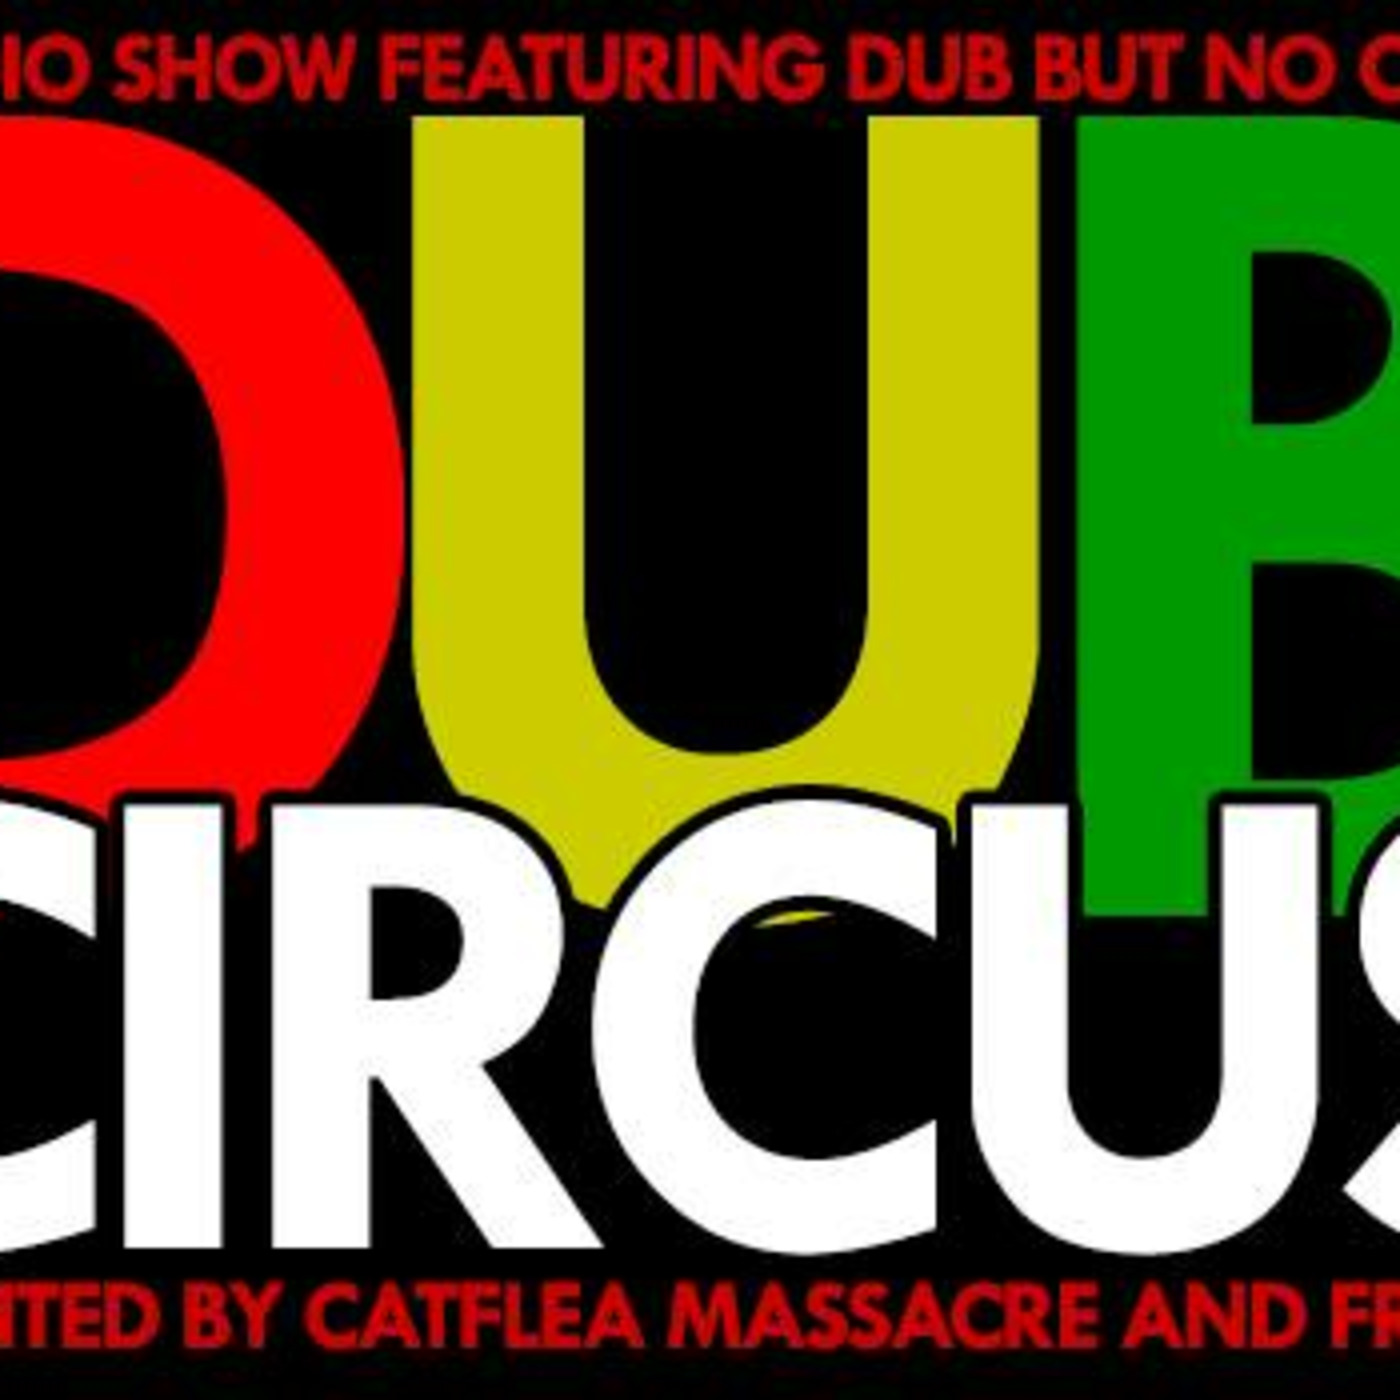 Episode 3066: Dub Circus Show 230 On bootboyradio.net